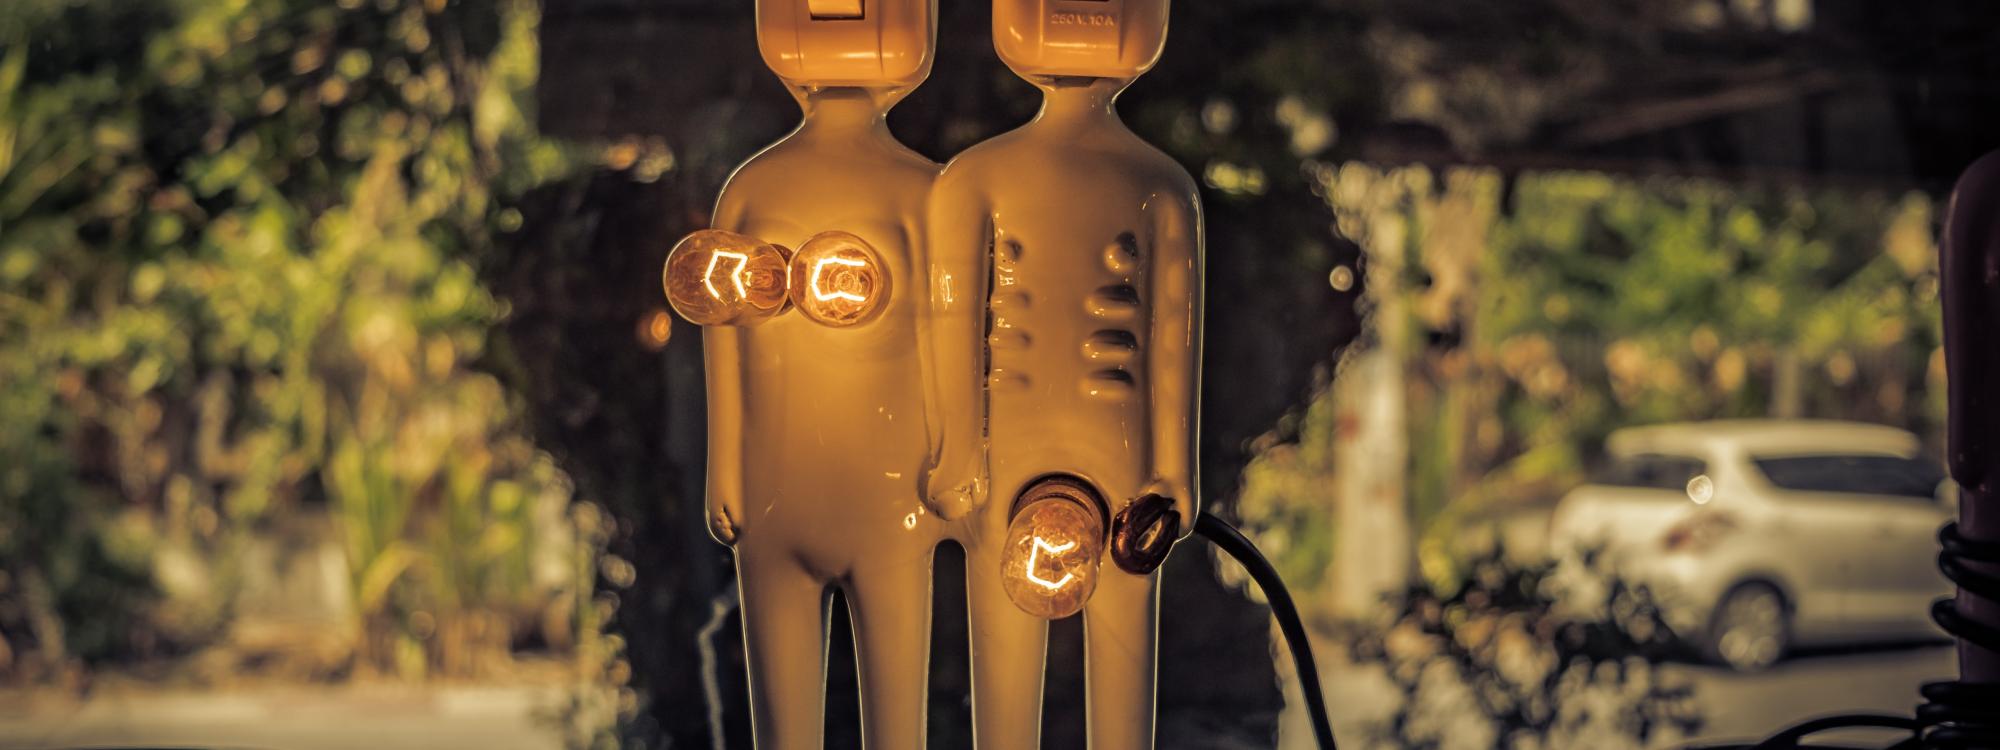 Robots with lightbulbs